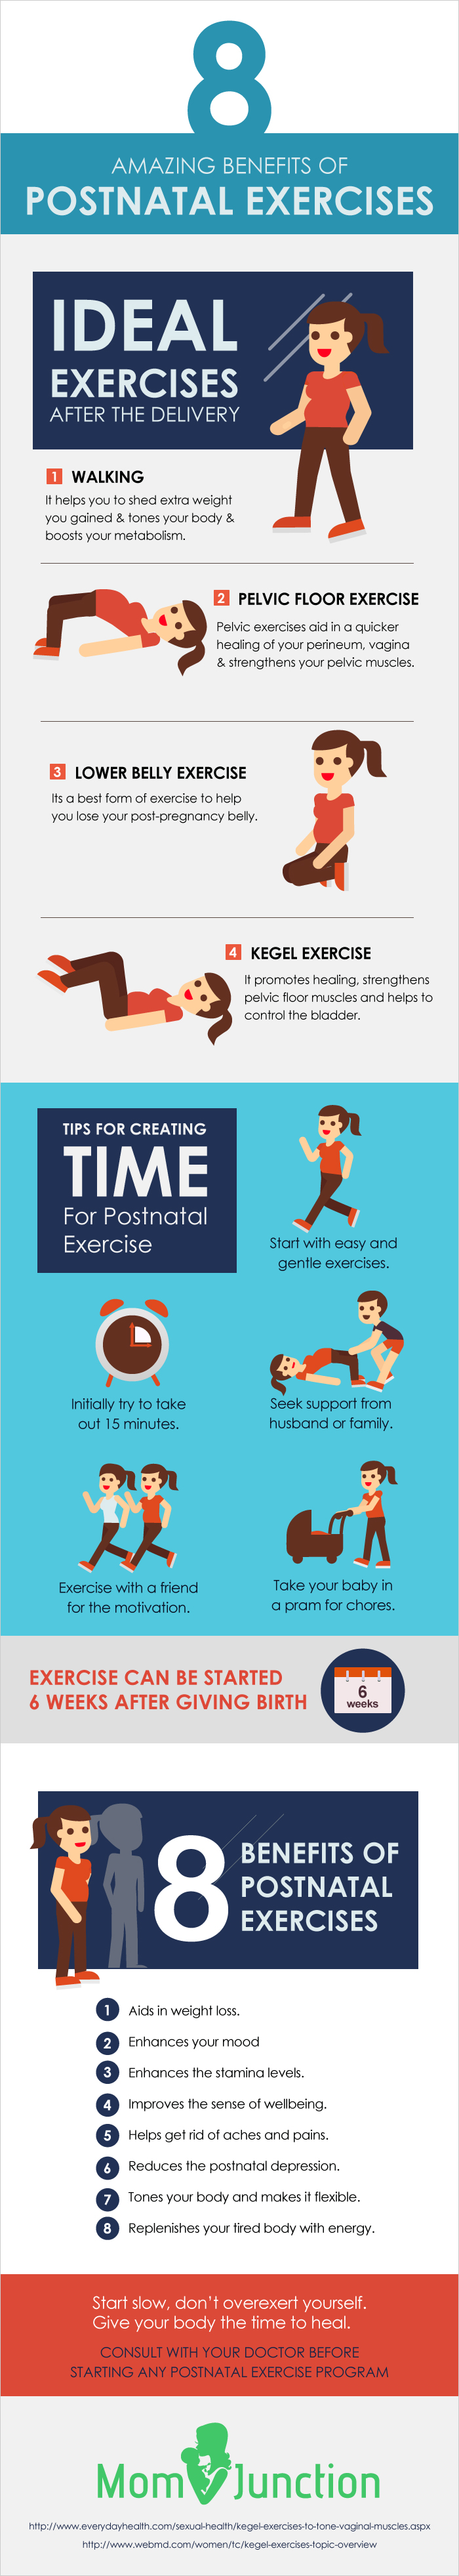 7 Amazing Benefits Of Postnatal Exercises